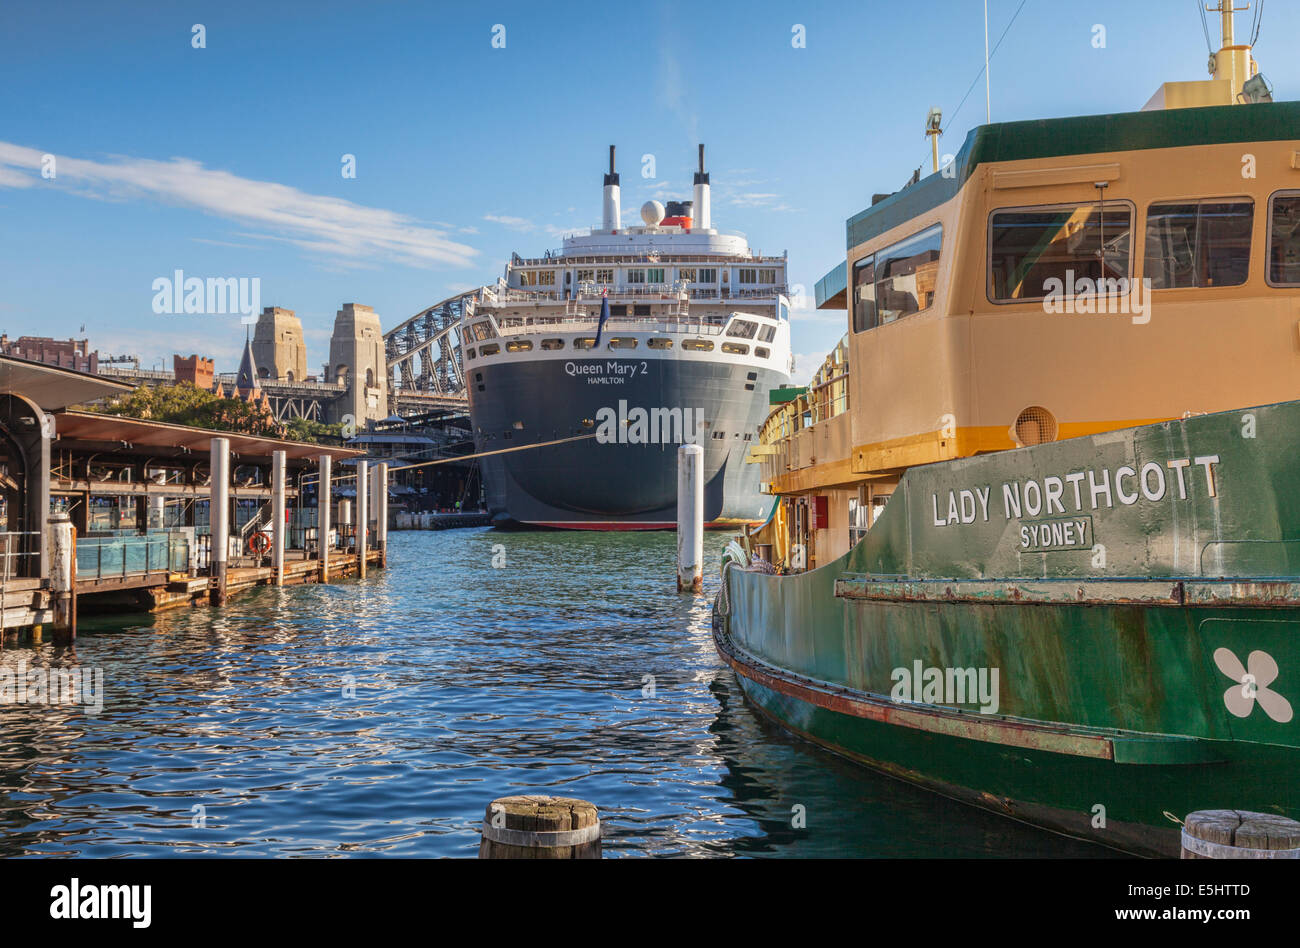 Ferry Sydney Dame Northcott et Cunard Liner Queen Mary 2 amarré à Circular Quay, Sydney, Australie. Banque D'Images